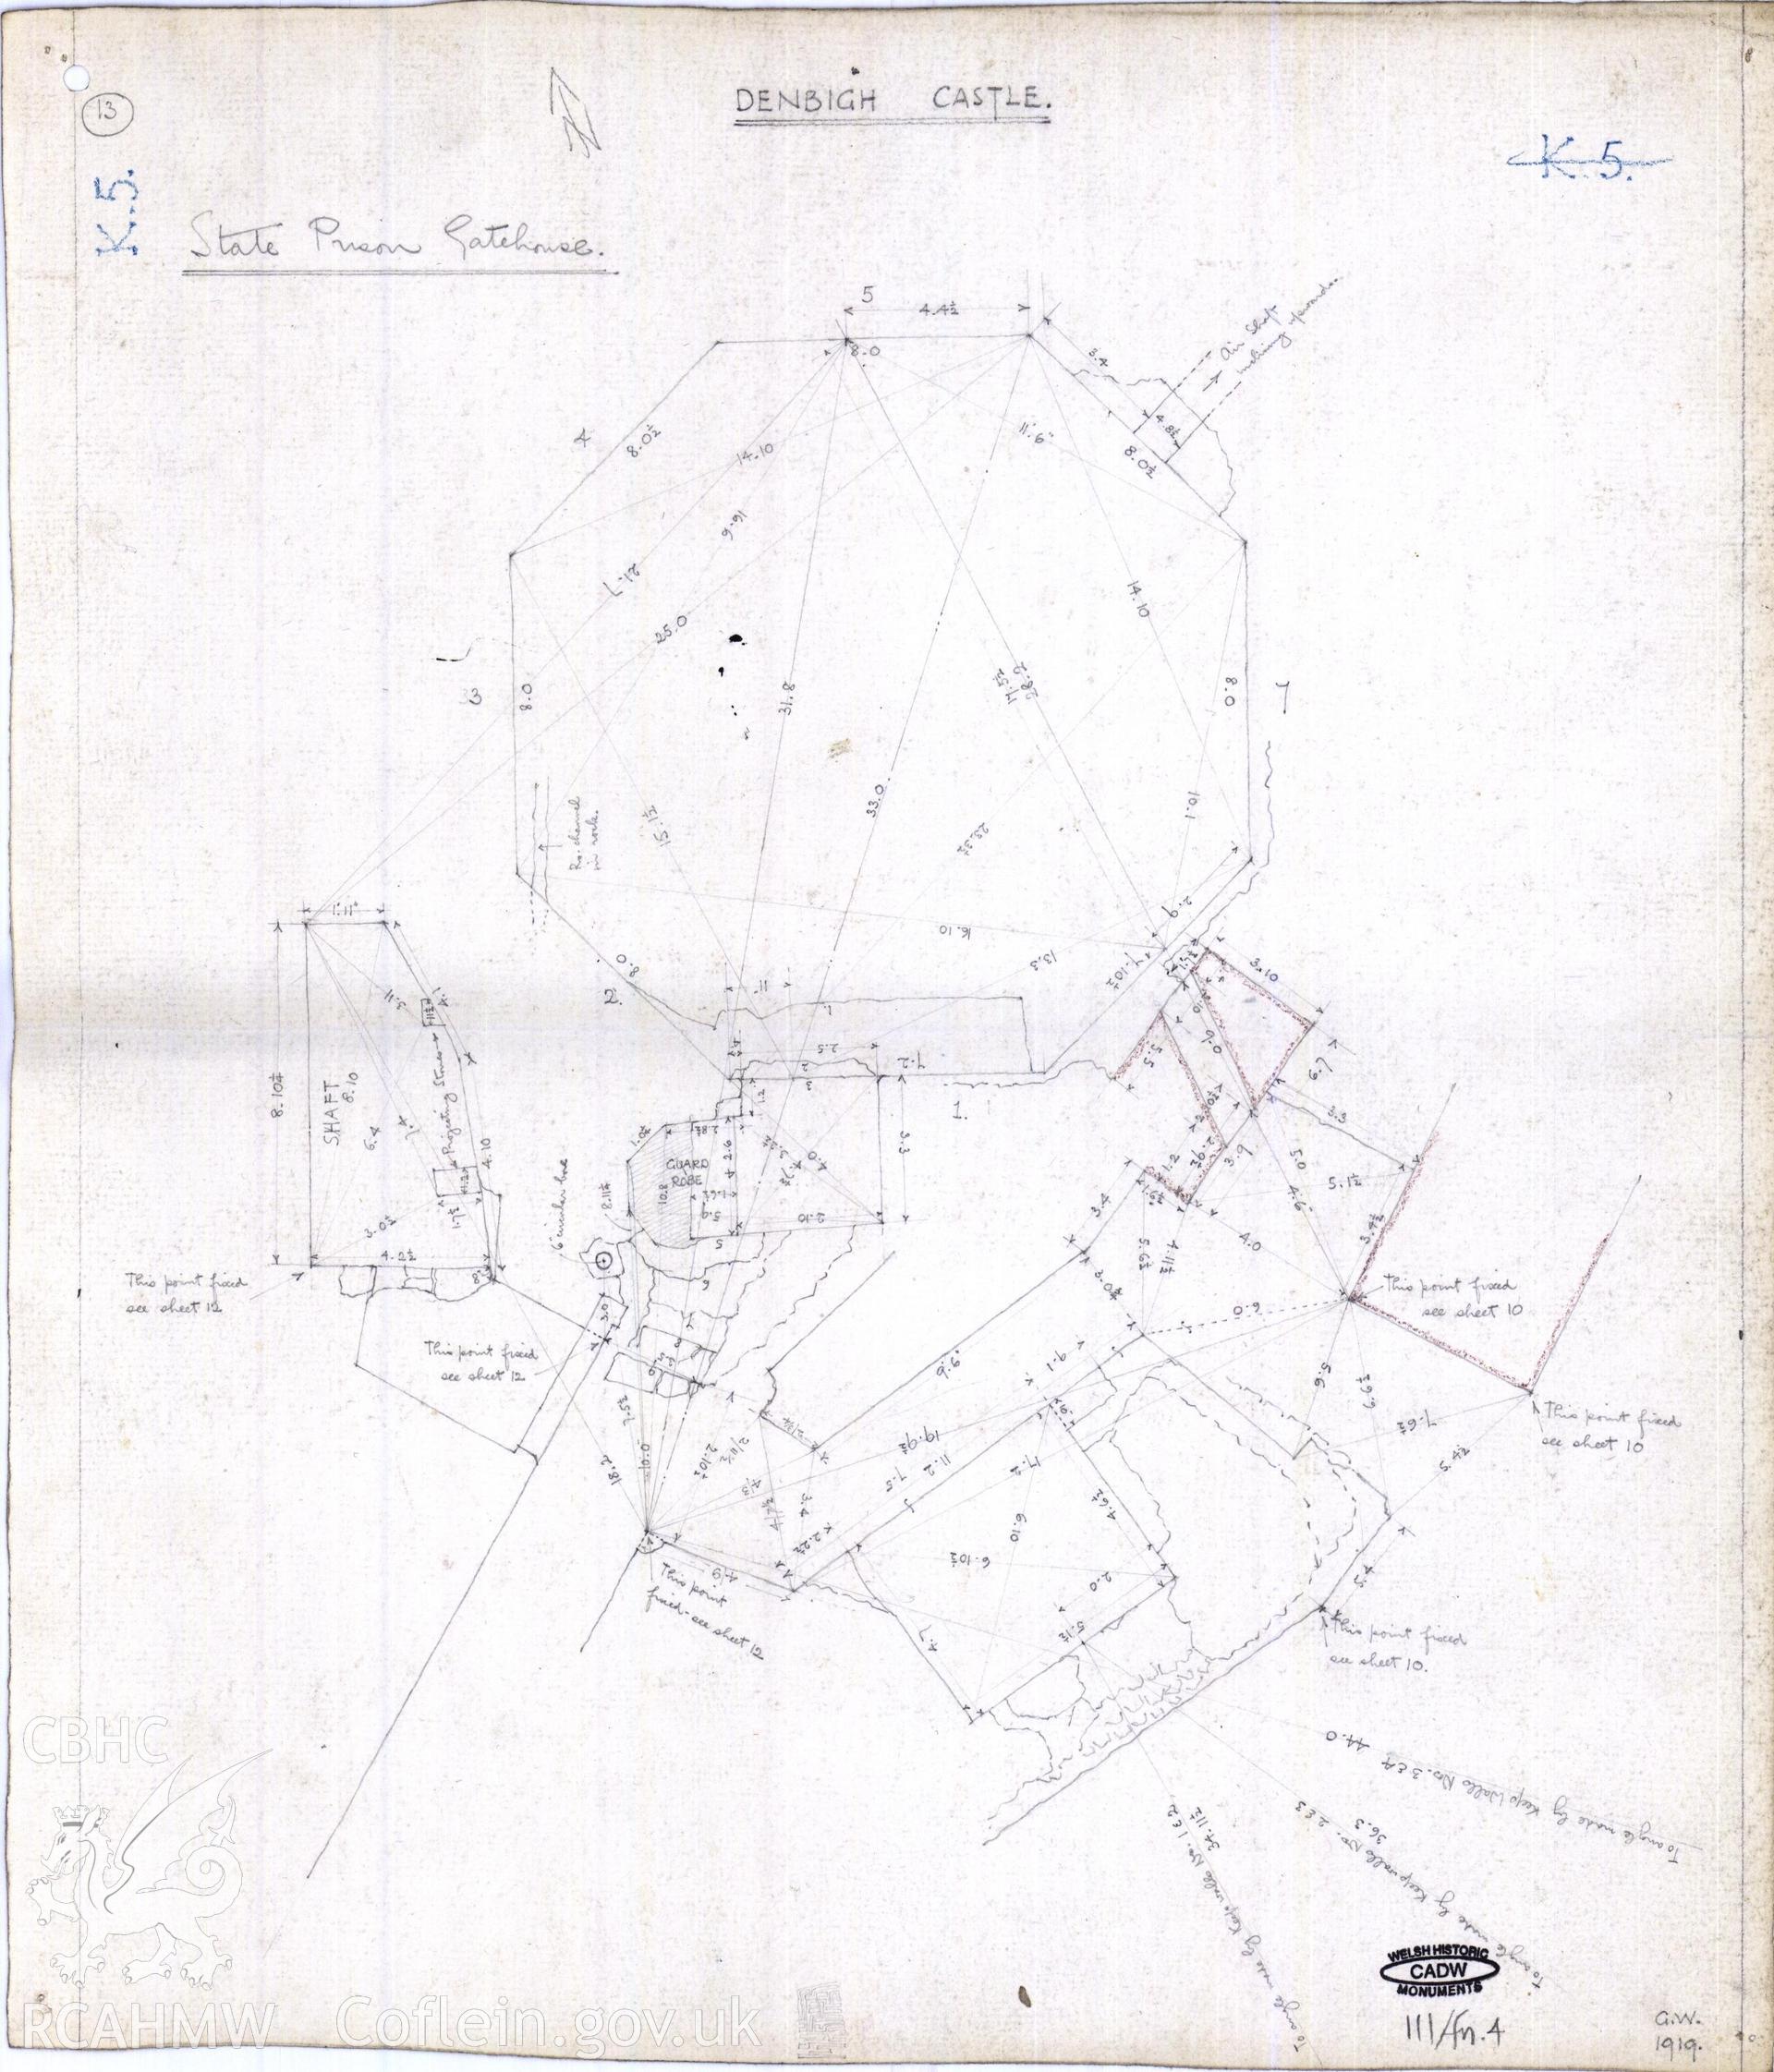 Cadw guardianship monument drawing of Denbigh Castle. T1, n & ground plan (13) K5. Cadw Ref. No:111/fn.4. No scale.